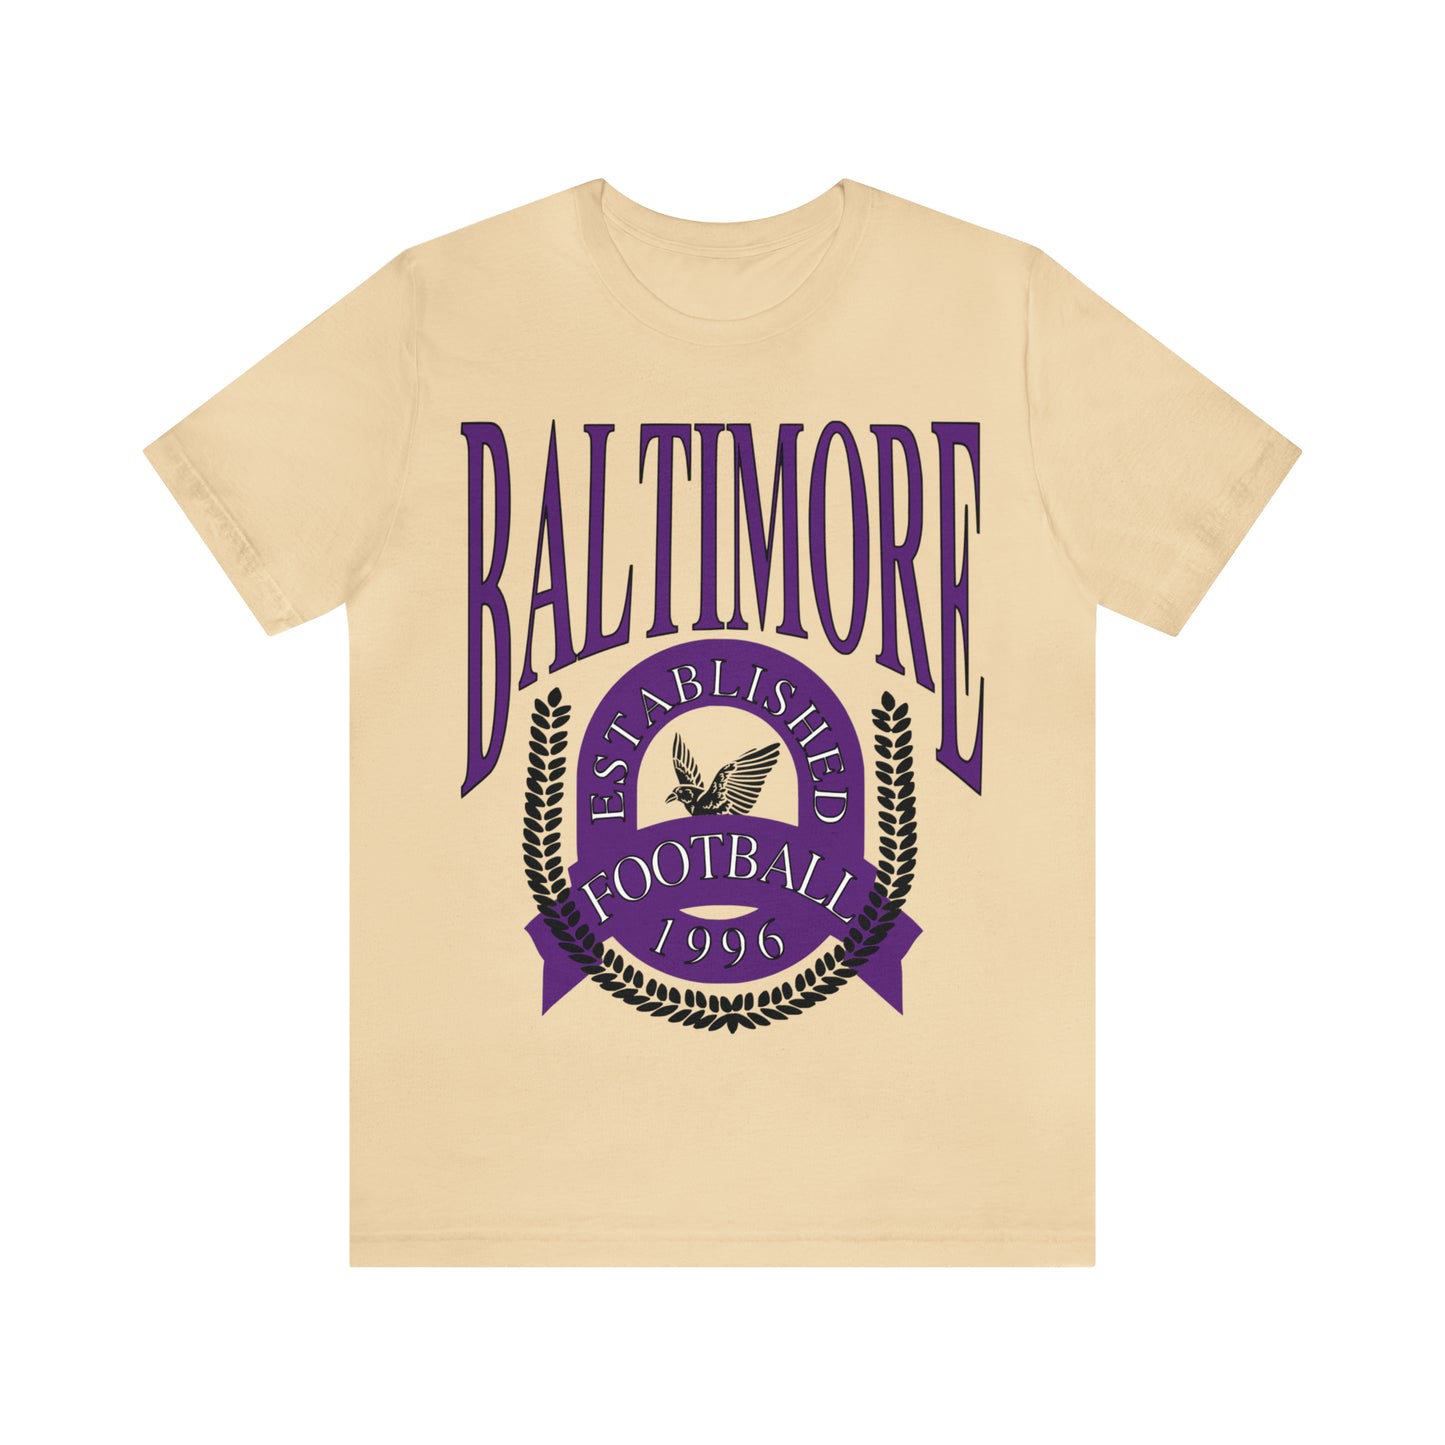 Baltimore Ravens T-Shirt Lamar Jackson, OBJ, Odell Beckham Jr, Men's, Women's, Lamar Jackson, Vintage, Retro, Short Sleeve, The Dallas Family, Etsy, The Dallas Family, Oversized, Cute, Affordable, Retro, Cheap, Soft, Tan Sand Beige Khaki